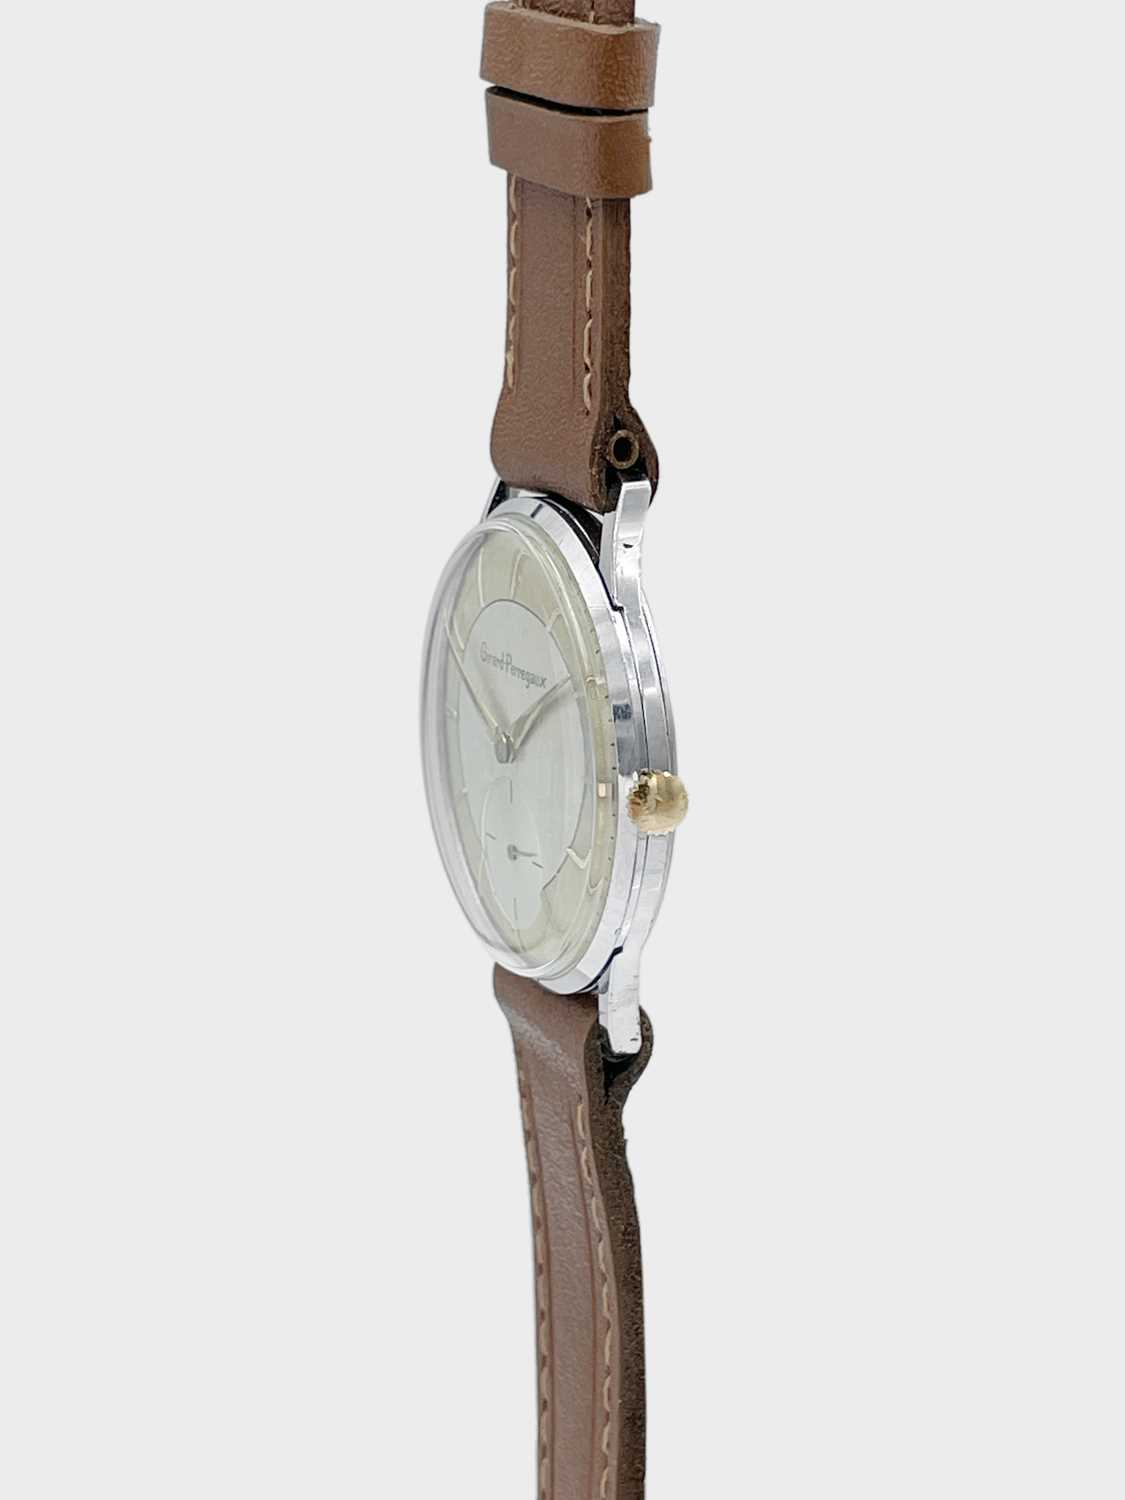 GIRARD-PERREGAUX - A stainless steel manual wind gentleman's wristwatch. - Image 2 of 4